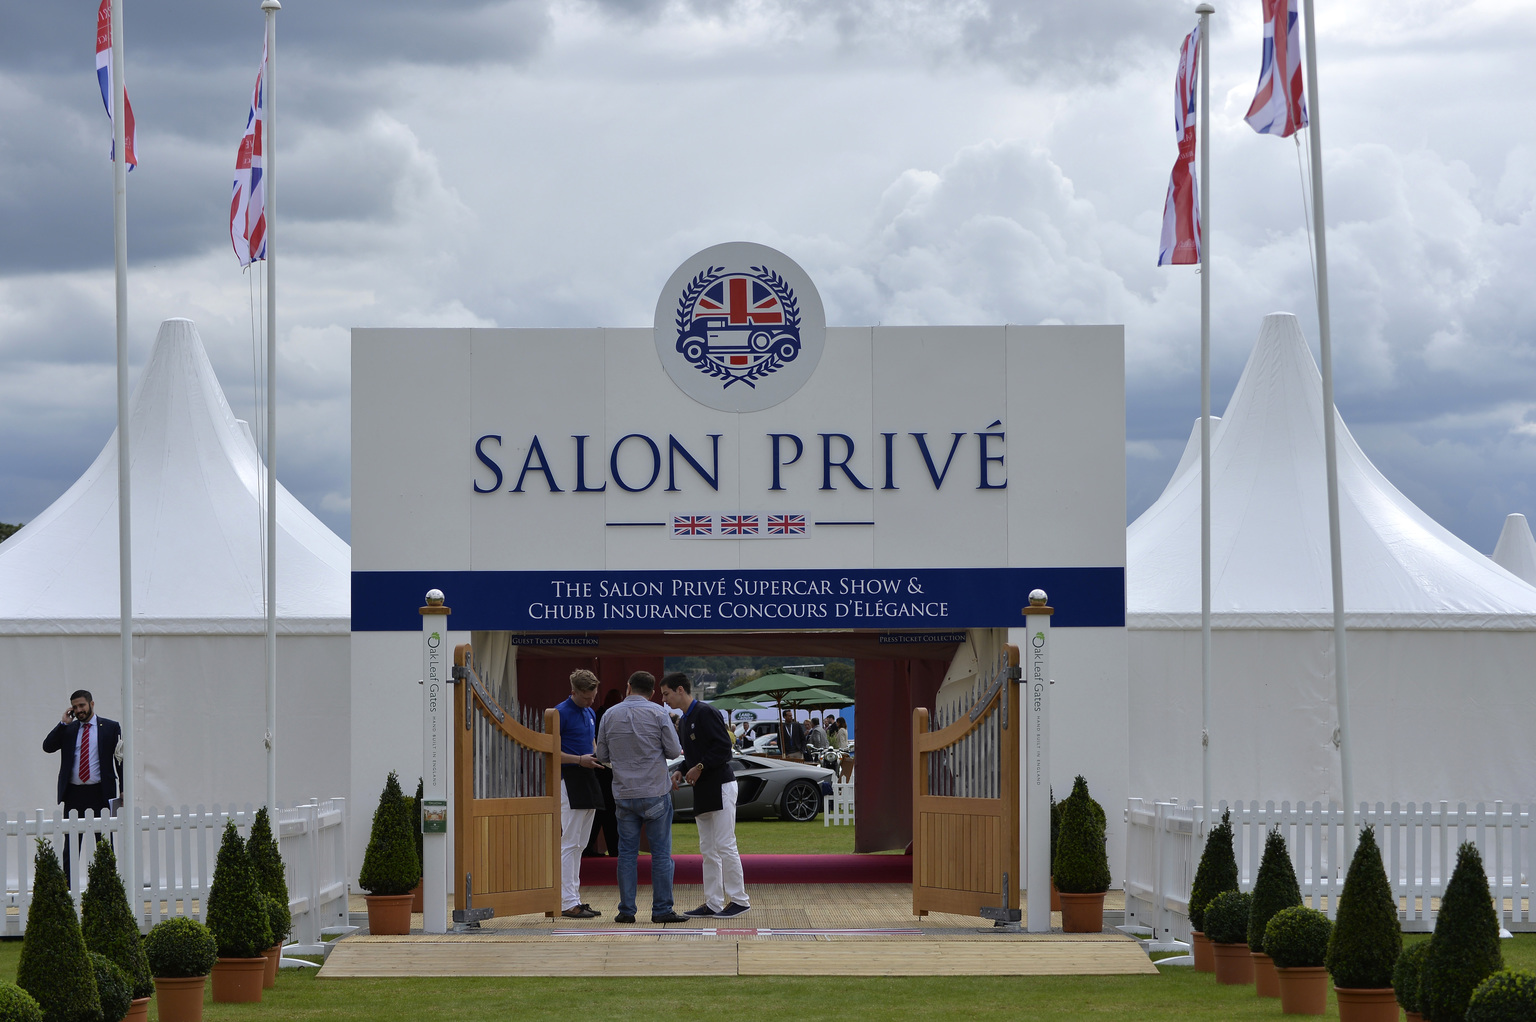 2015 Salon Priv Supercar Show and Chubb Insurance Concours d'Elgance